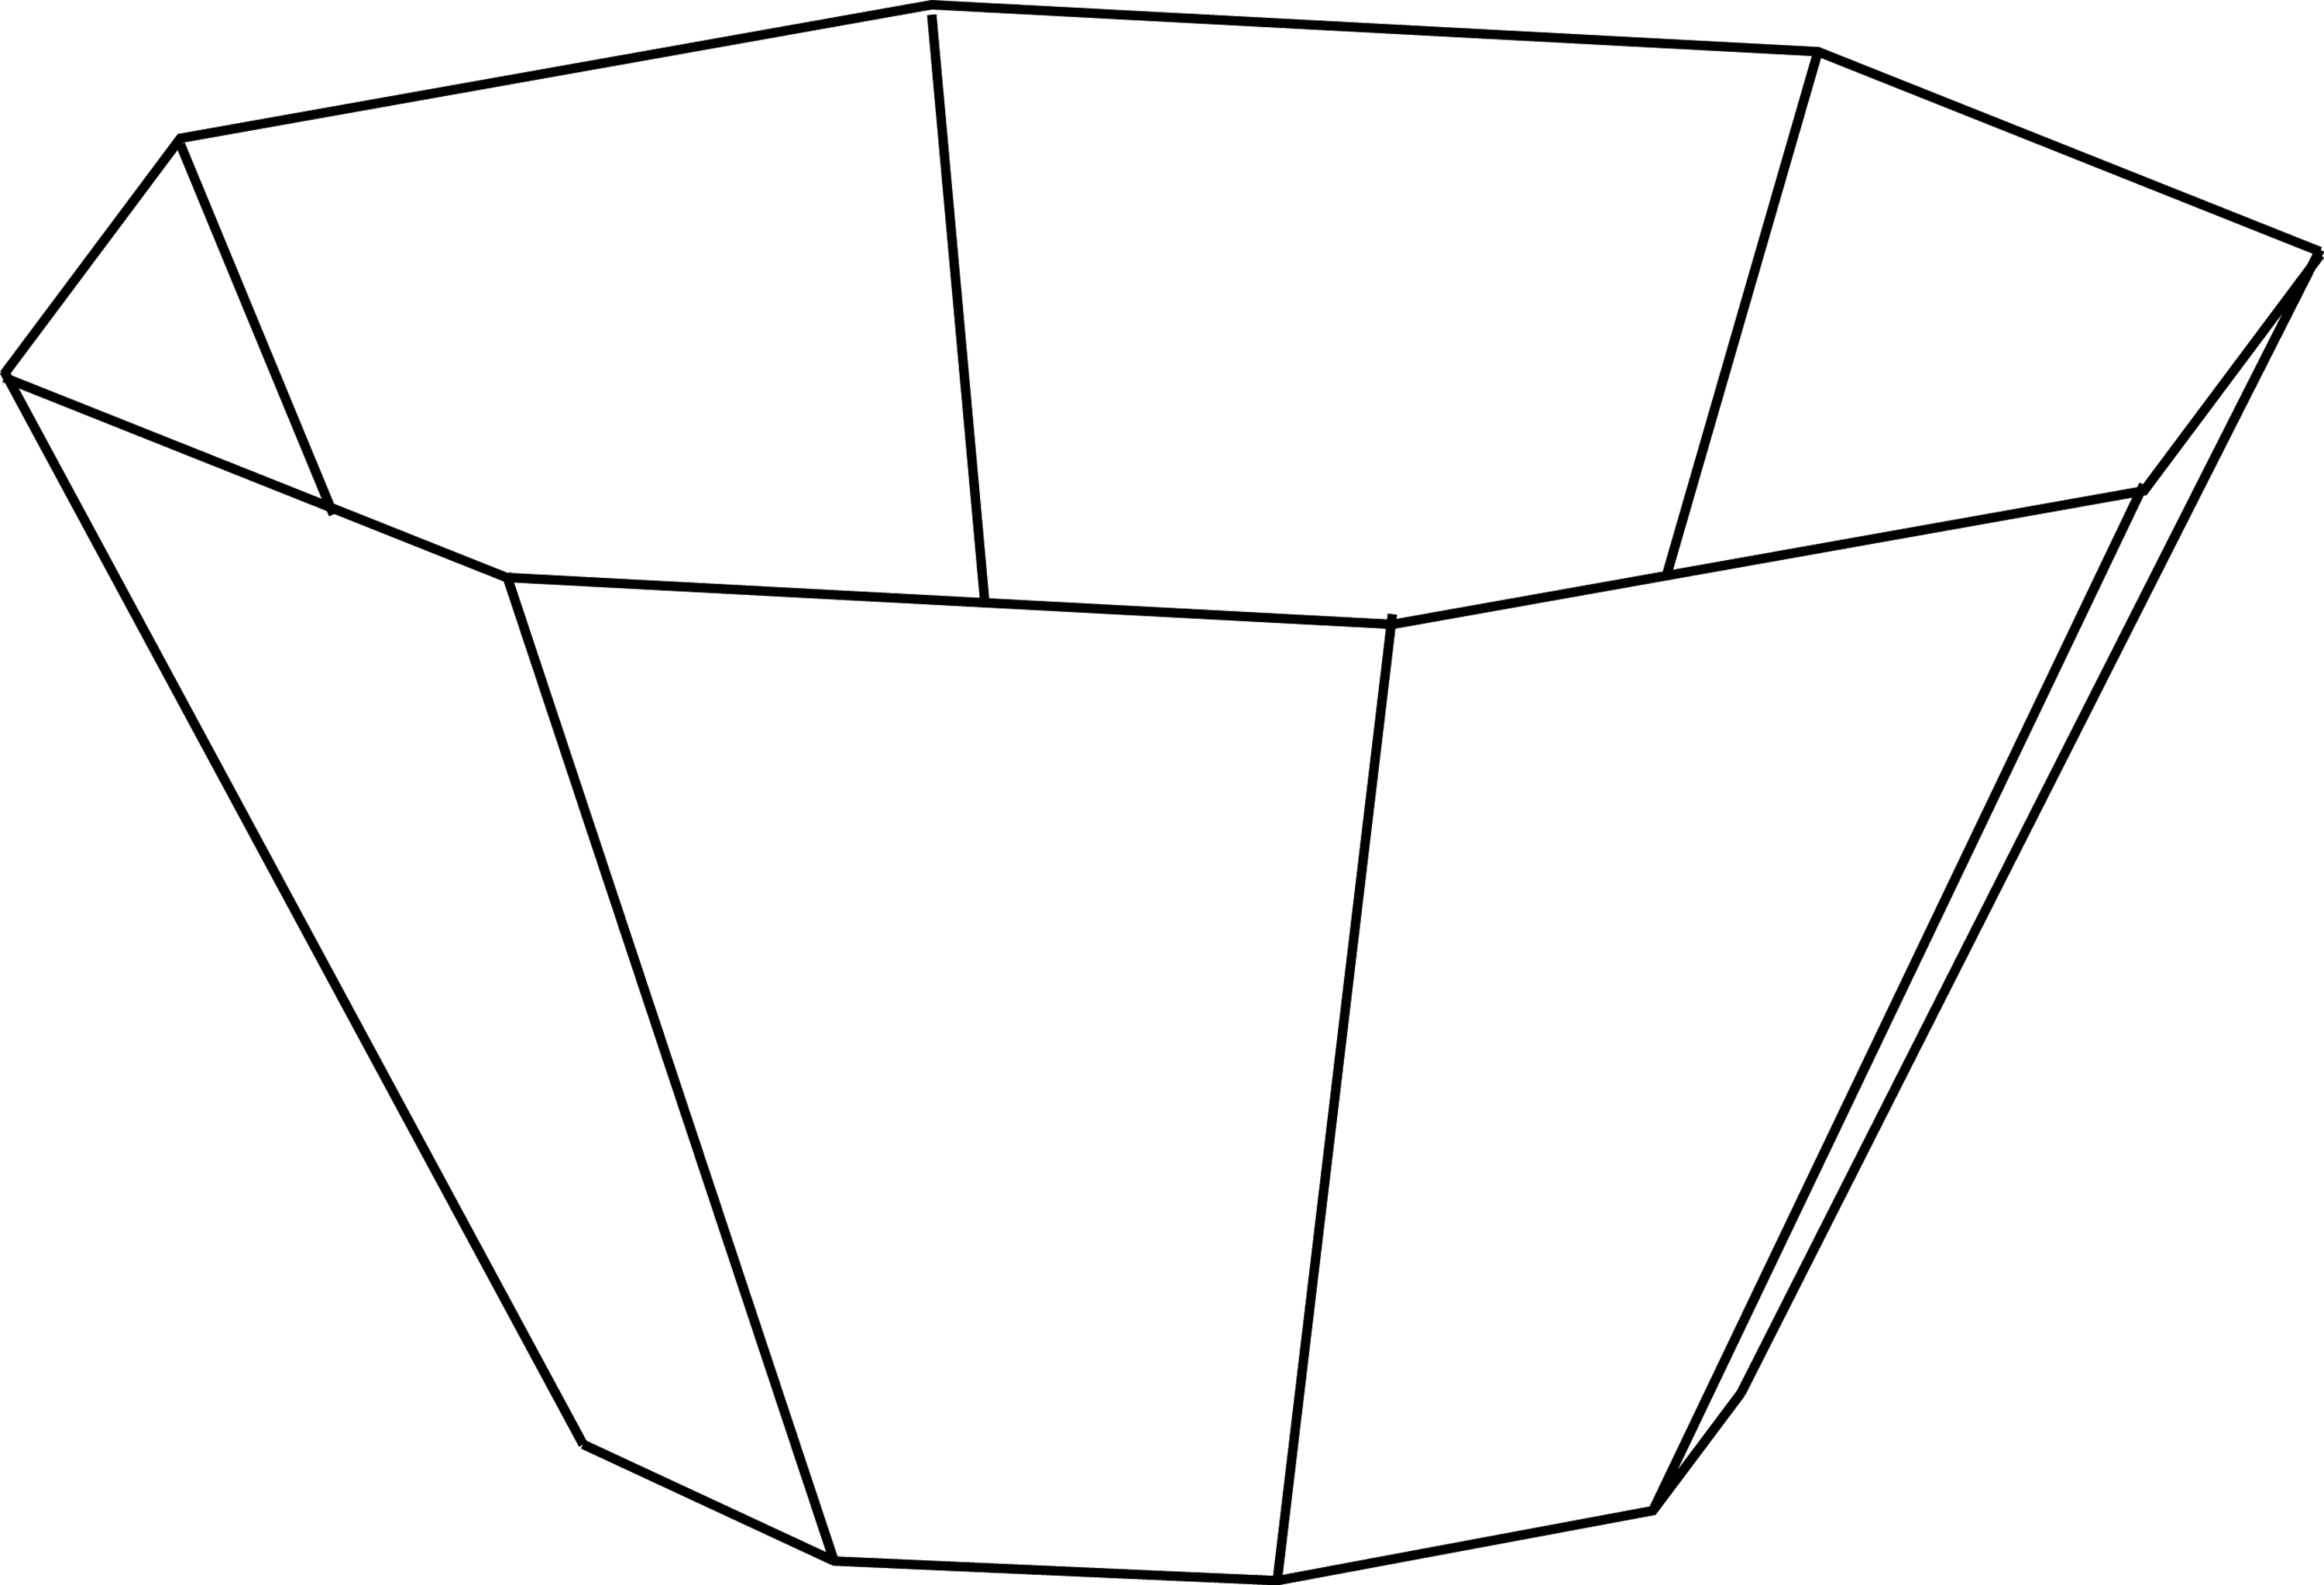 Frustum Of A Octagonal Pyramid | ClipArt ETC